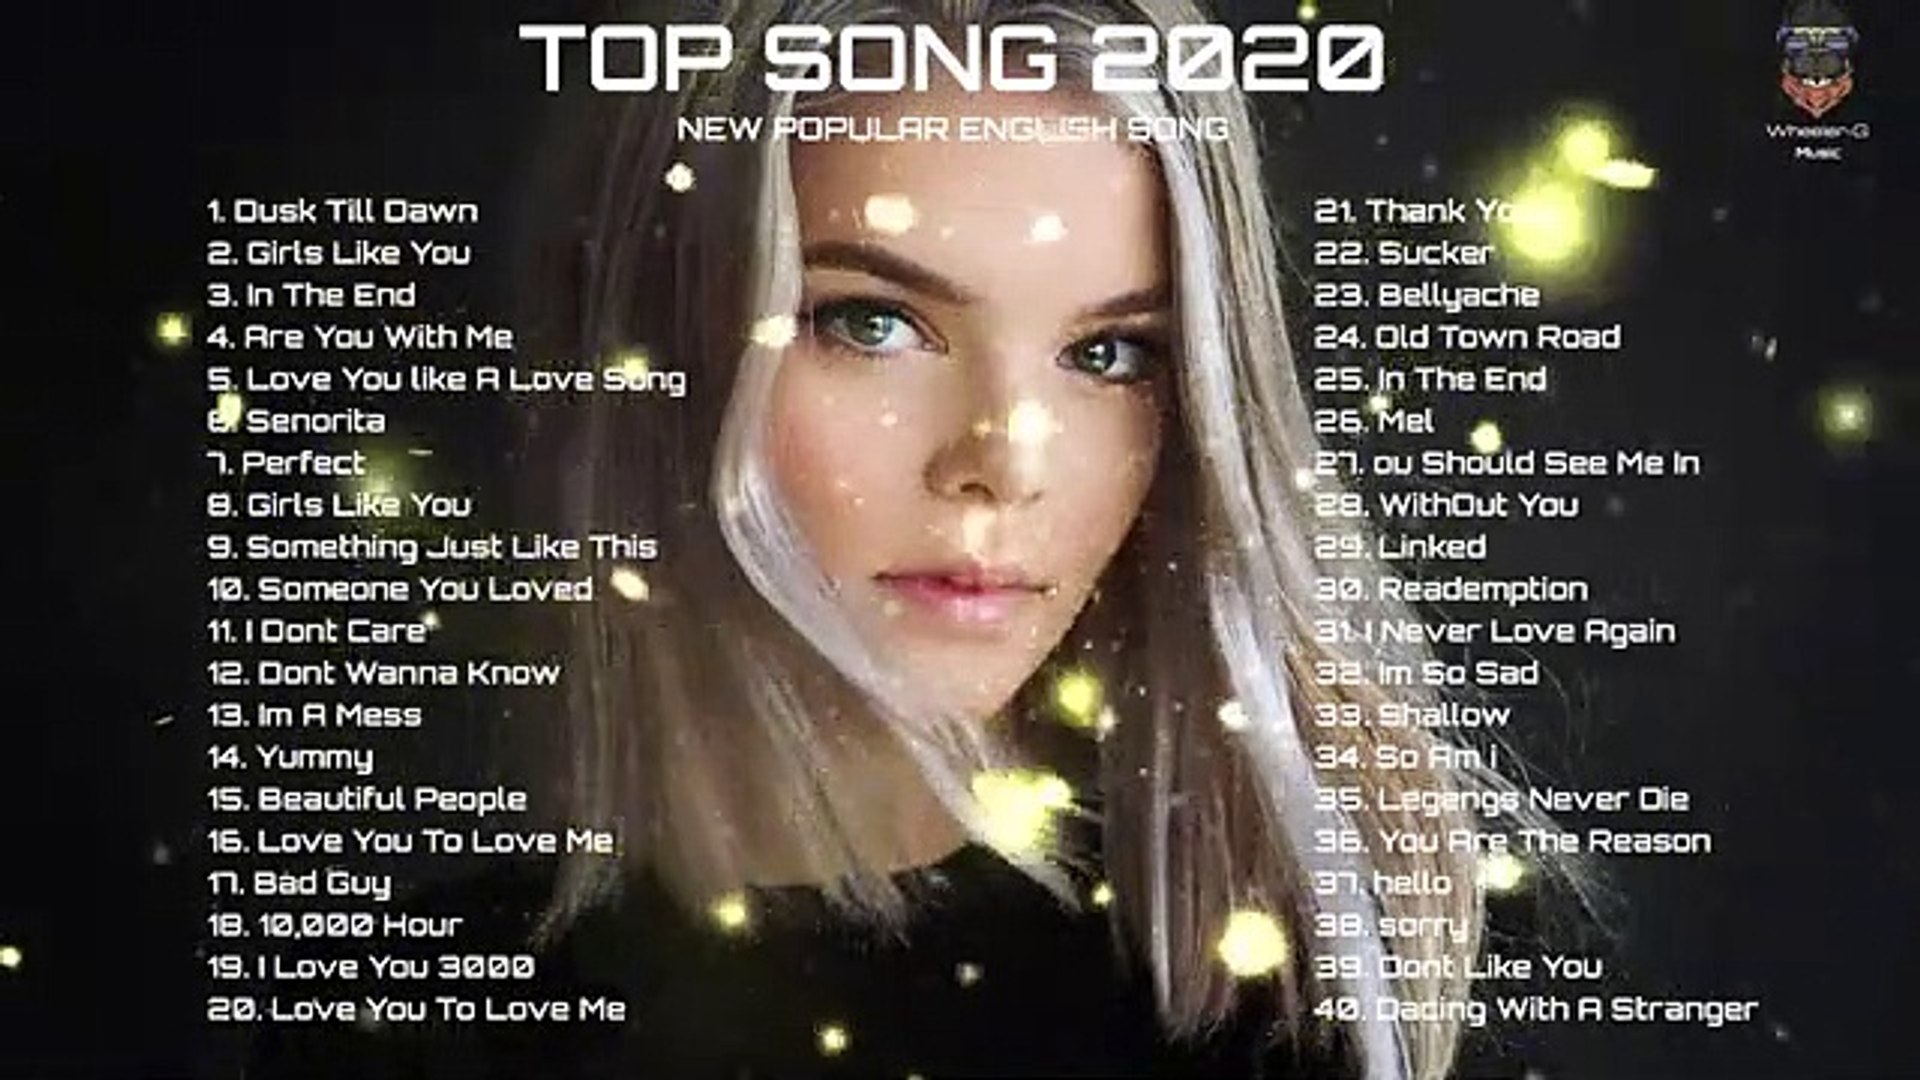 Music Top 50 Song - Music Billboard Music Top Songs 2020-[Wheeler-G]